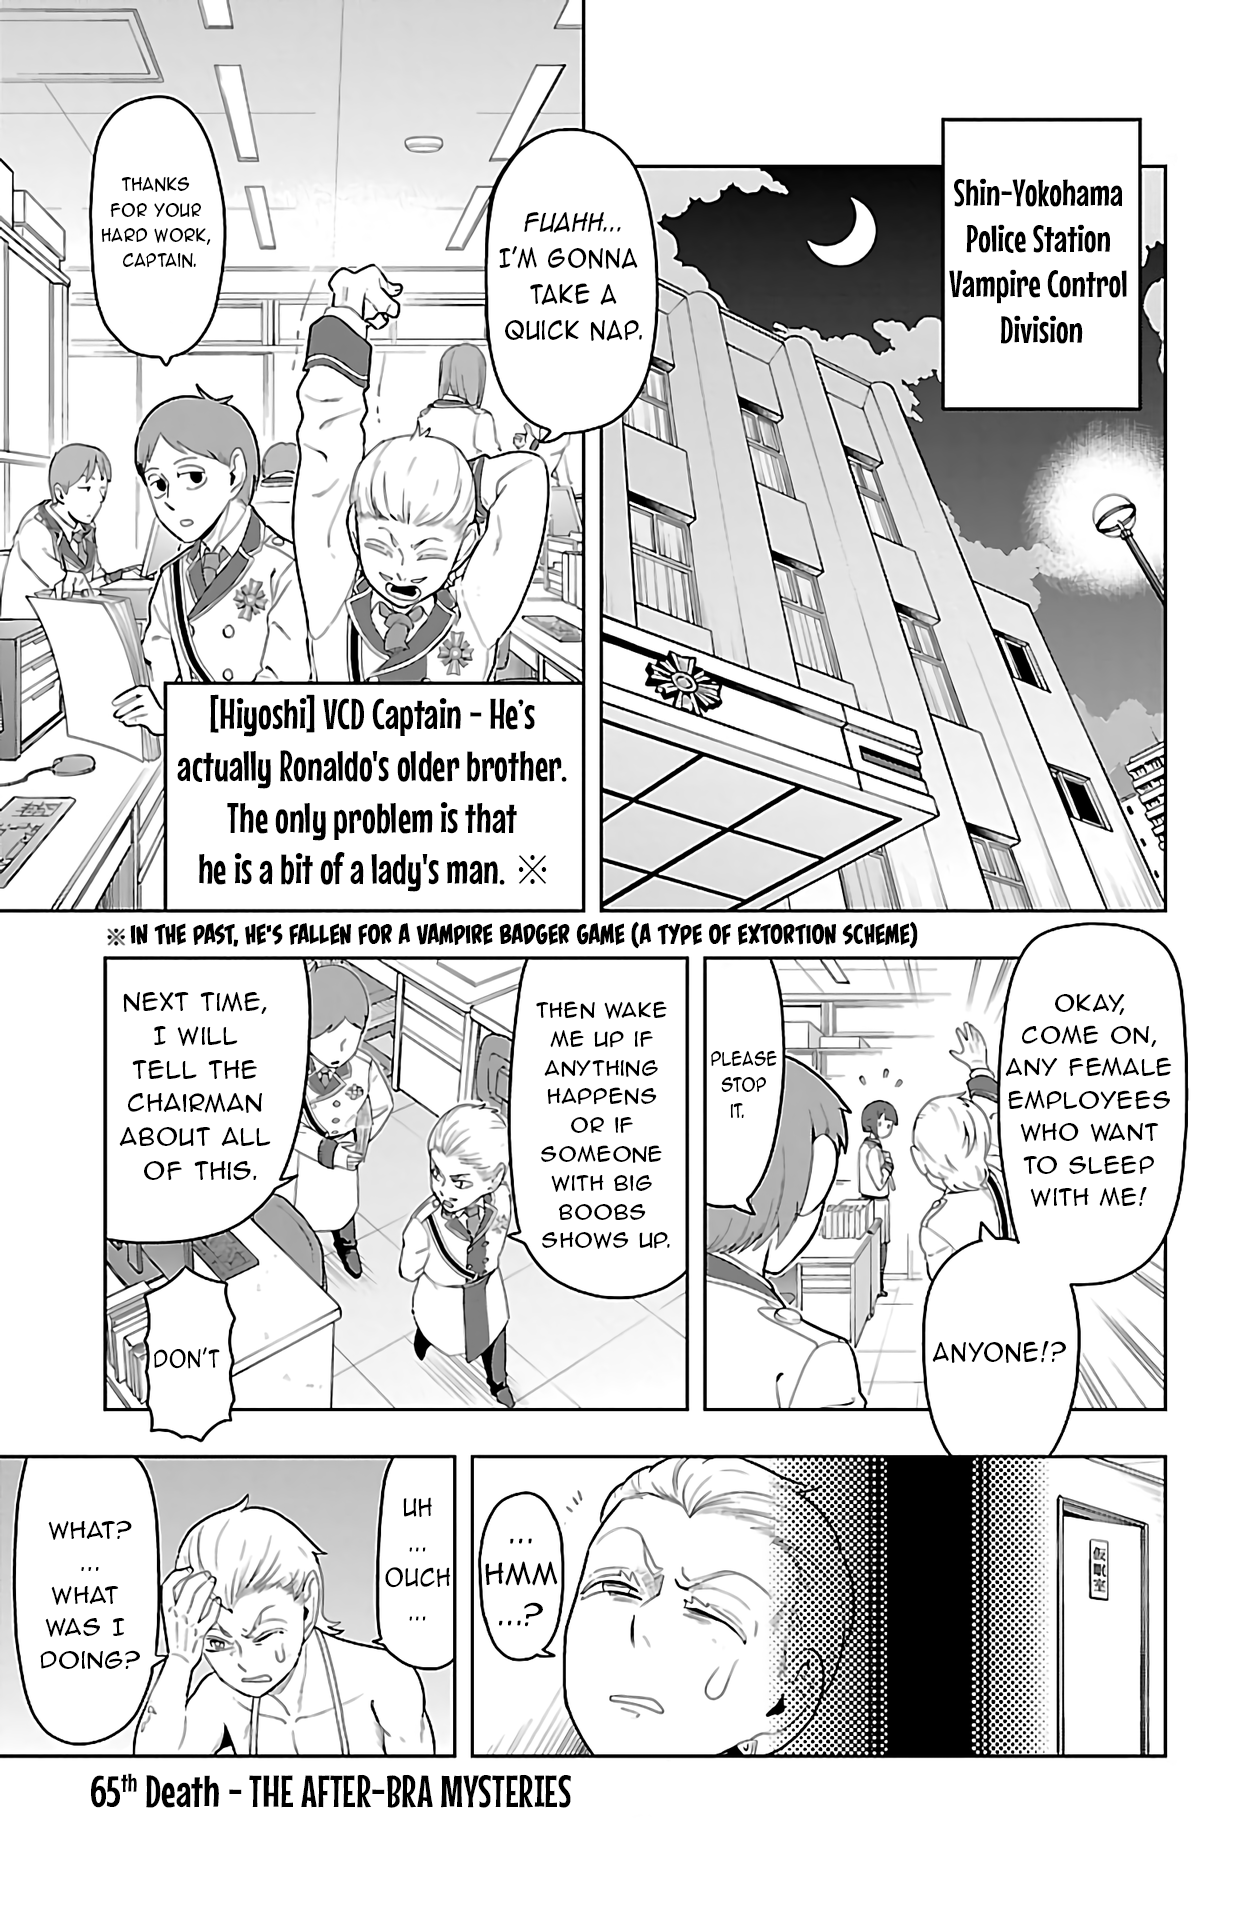 Kyuuketsuki Sugu Shinu Vol.6 Chapter 65: The After-Bra Mysteries - Picture 1